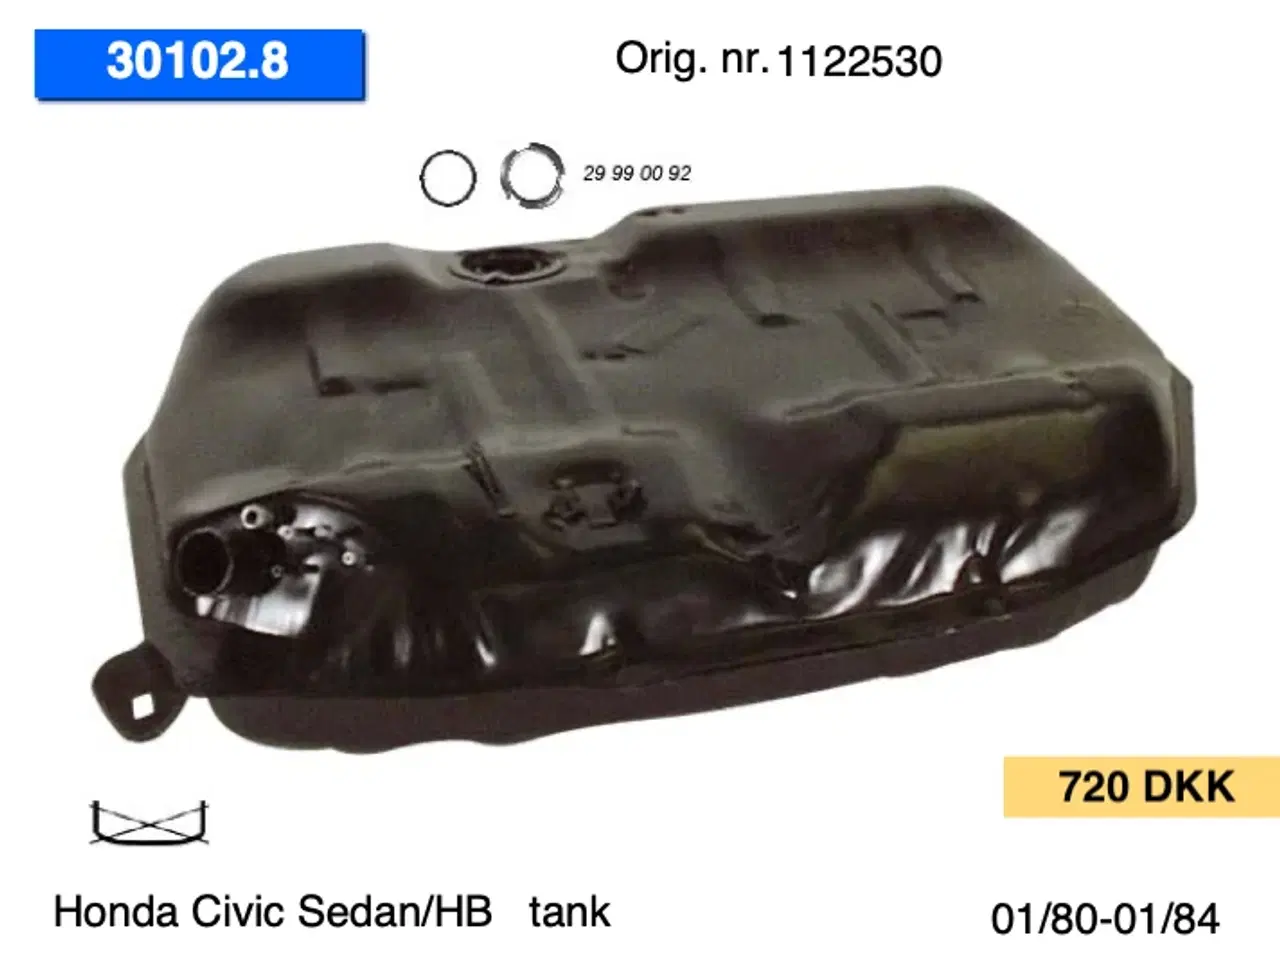 Billede 1 - Nye Honda Civic tank m.m.